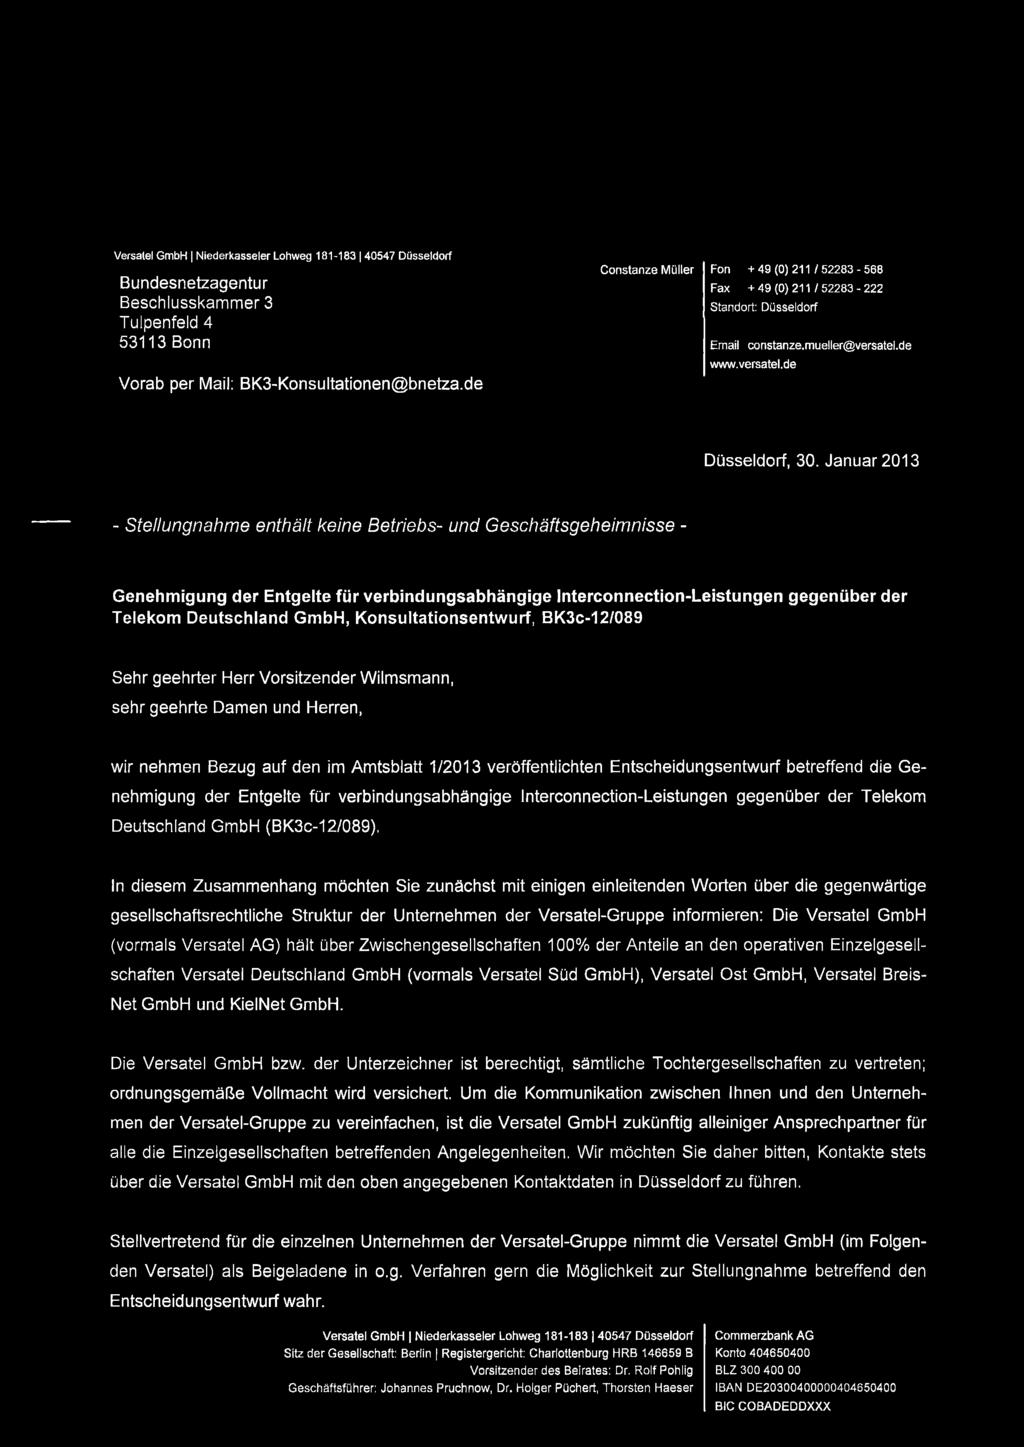 Tulpenfeld 4 53113 Bann Email constanze.mueller@versatel.de Vorab per Mail: BK3-Konsultationen@bnetza.de www.versatel.de Düsseldorf, 30.